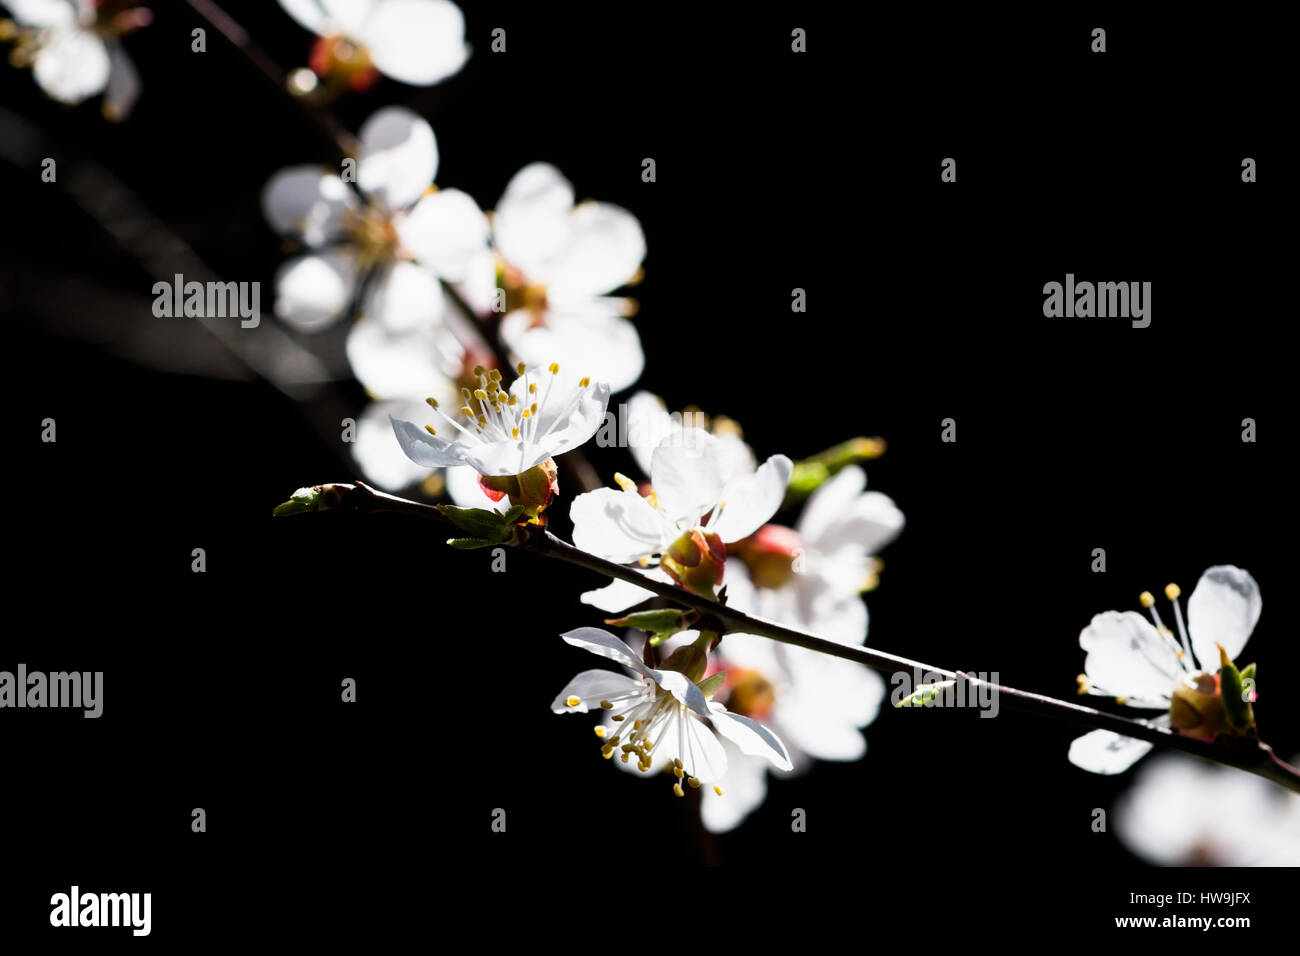 Sunlit Japanese apricot (prunus mume, plum blossoms) flowers against black background. Stock Photo